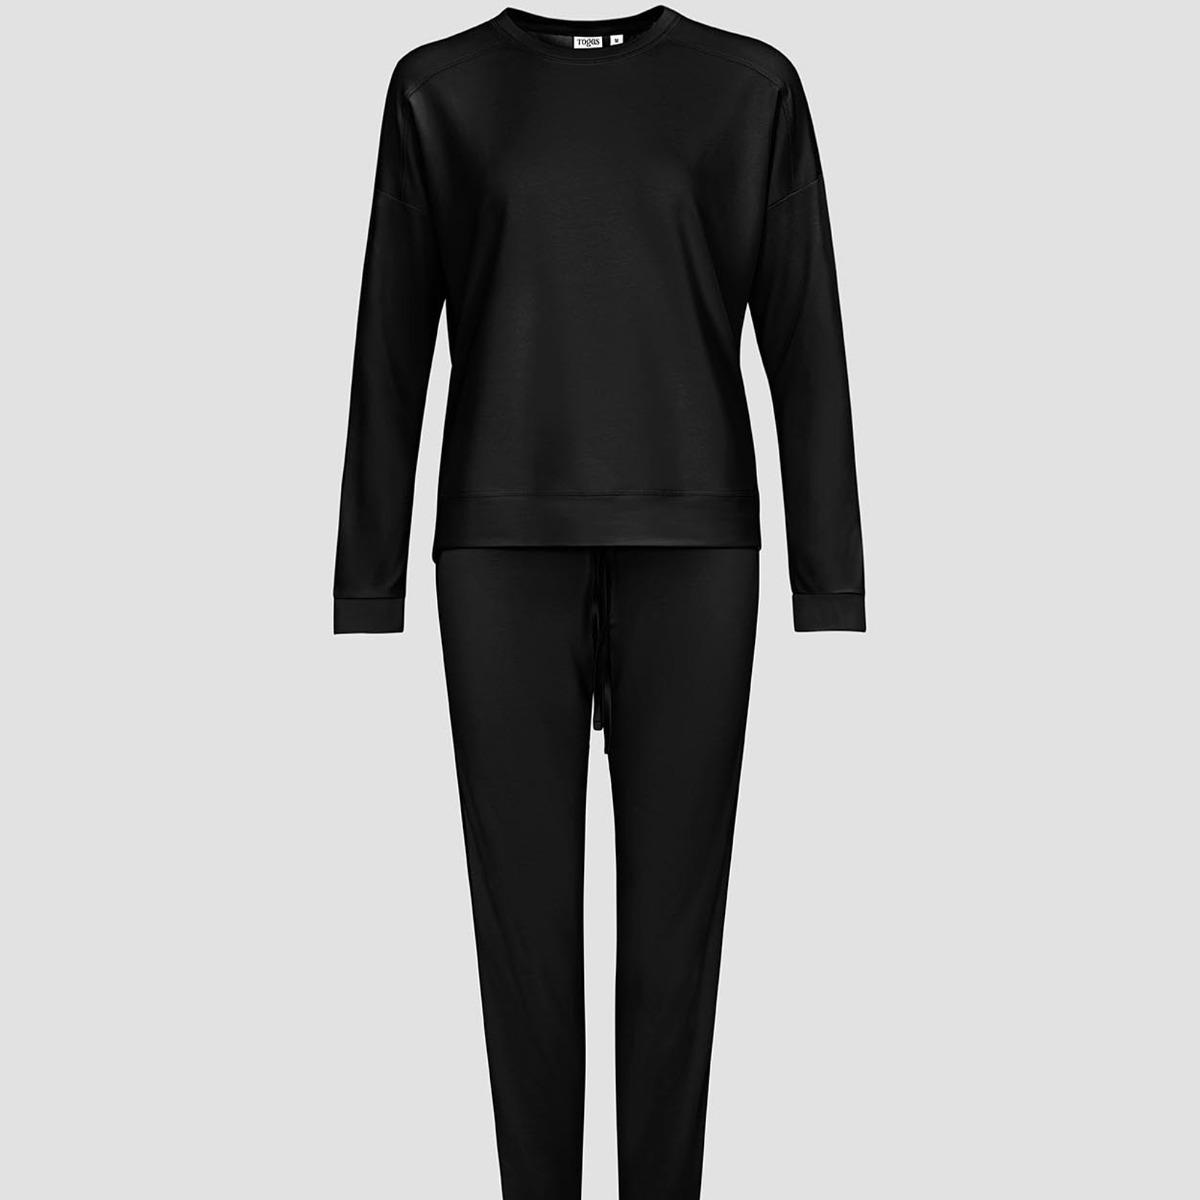 Женская пижама Togas Рене чёрная L (48), цвет чёрный, размер 48